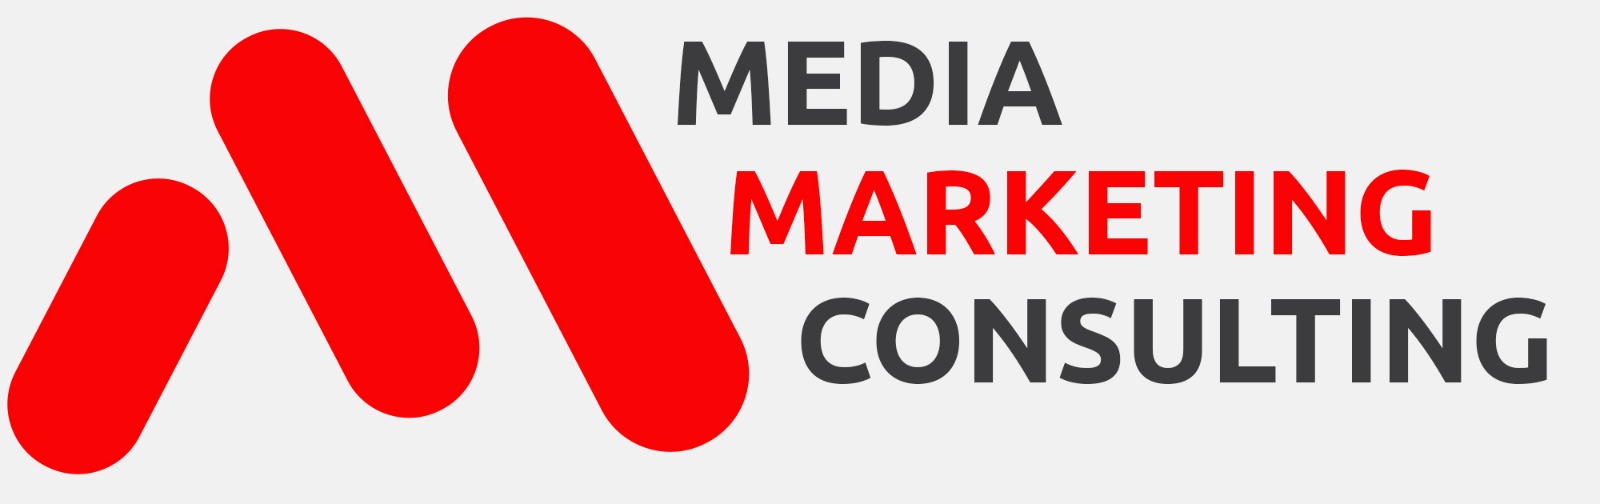 media marketing consulting